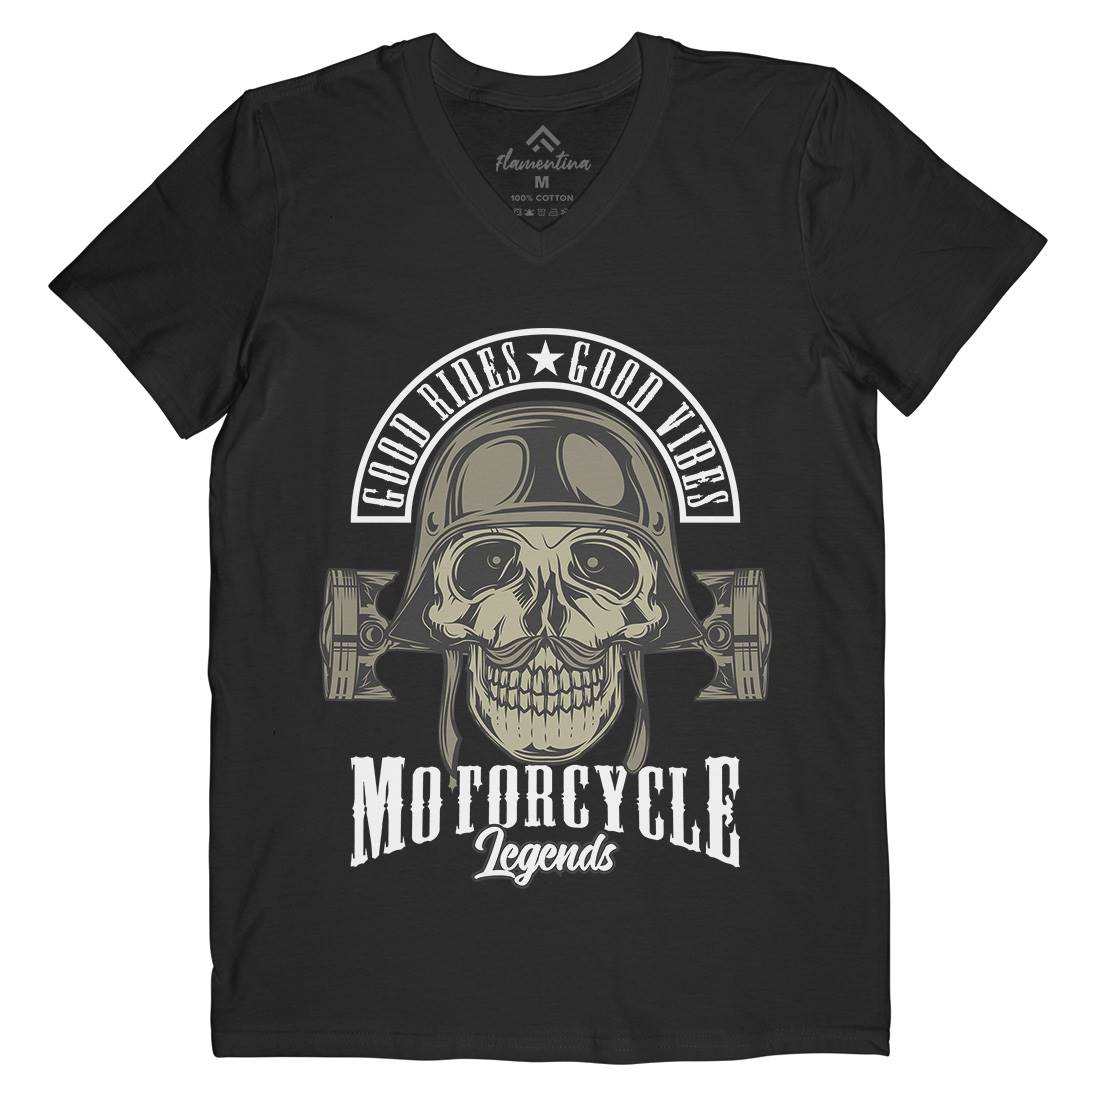 Legends Mens V-Neck T-Shirt Motorcycles C888